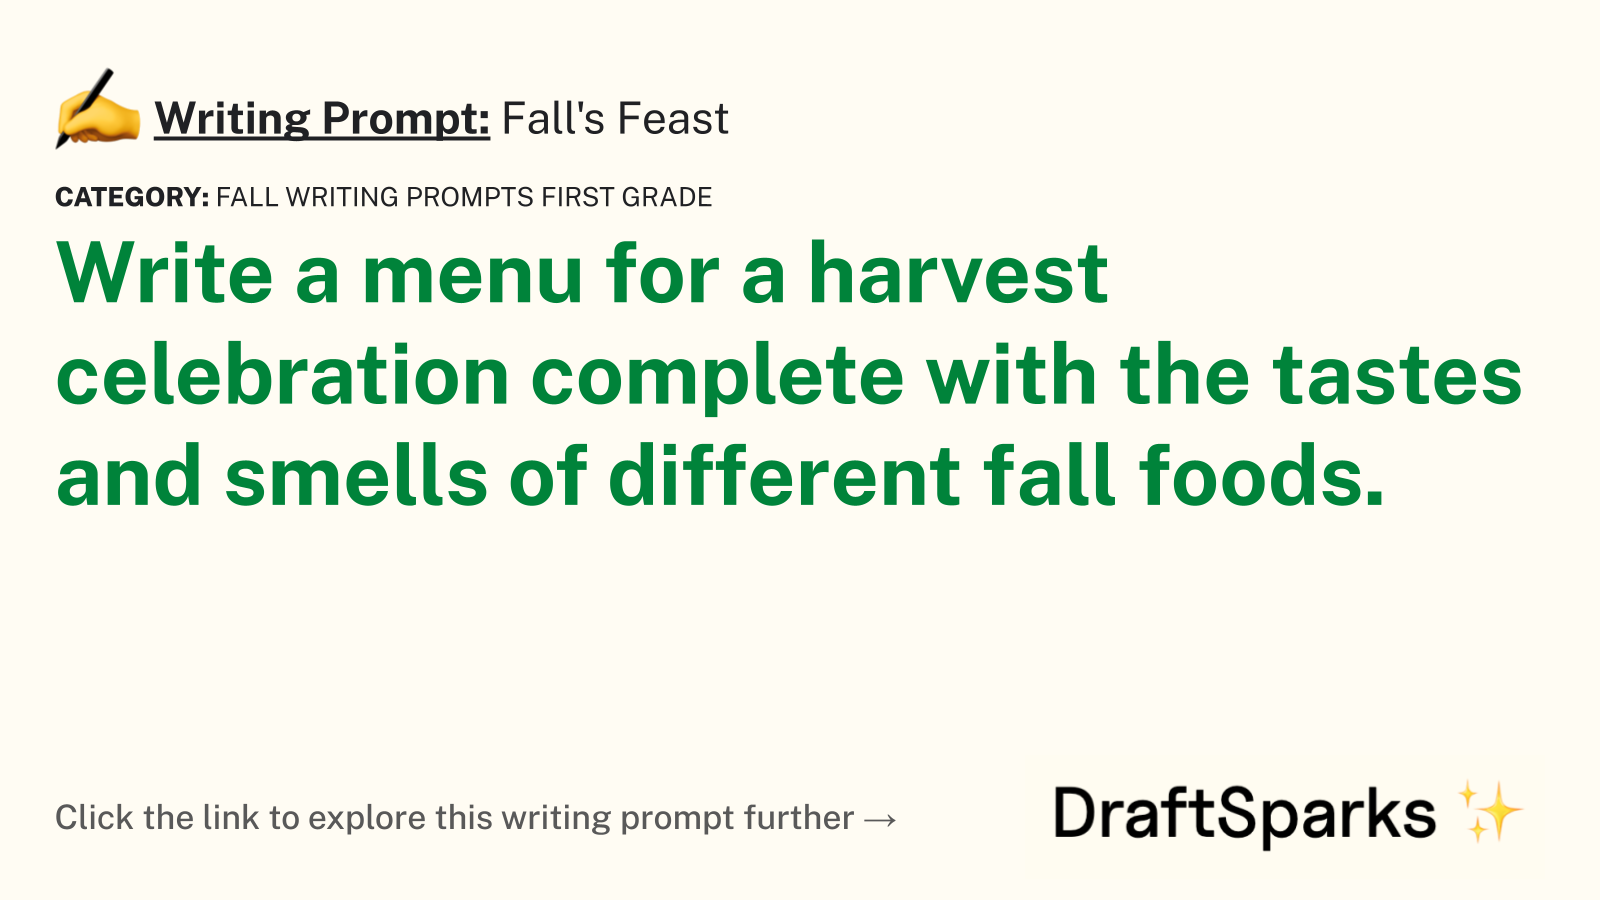 Fall’s Feast